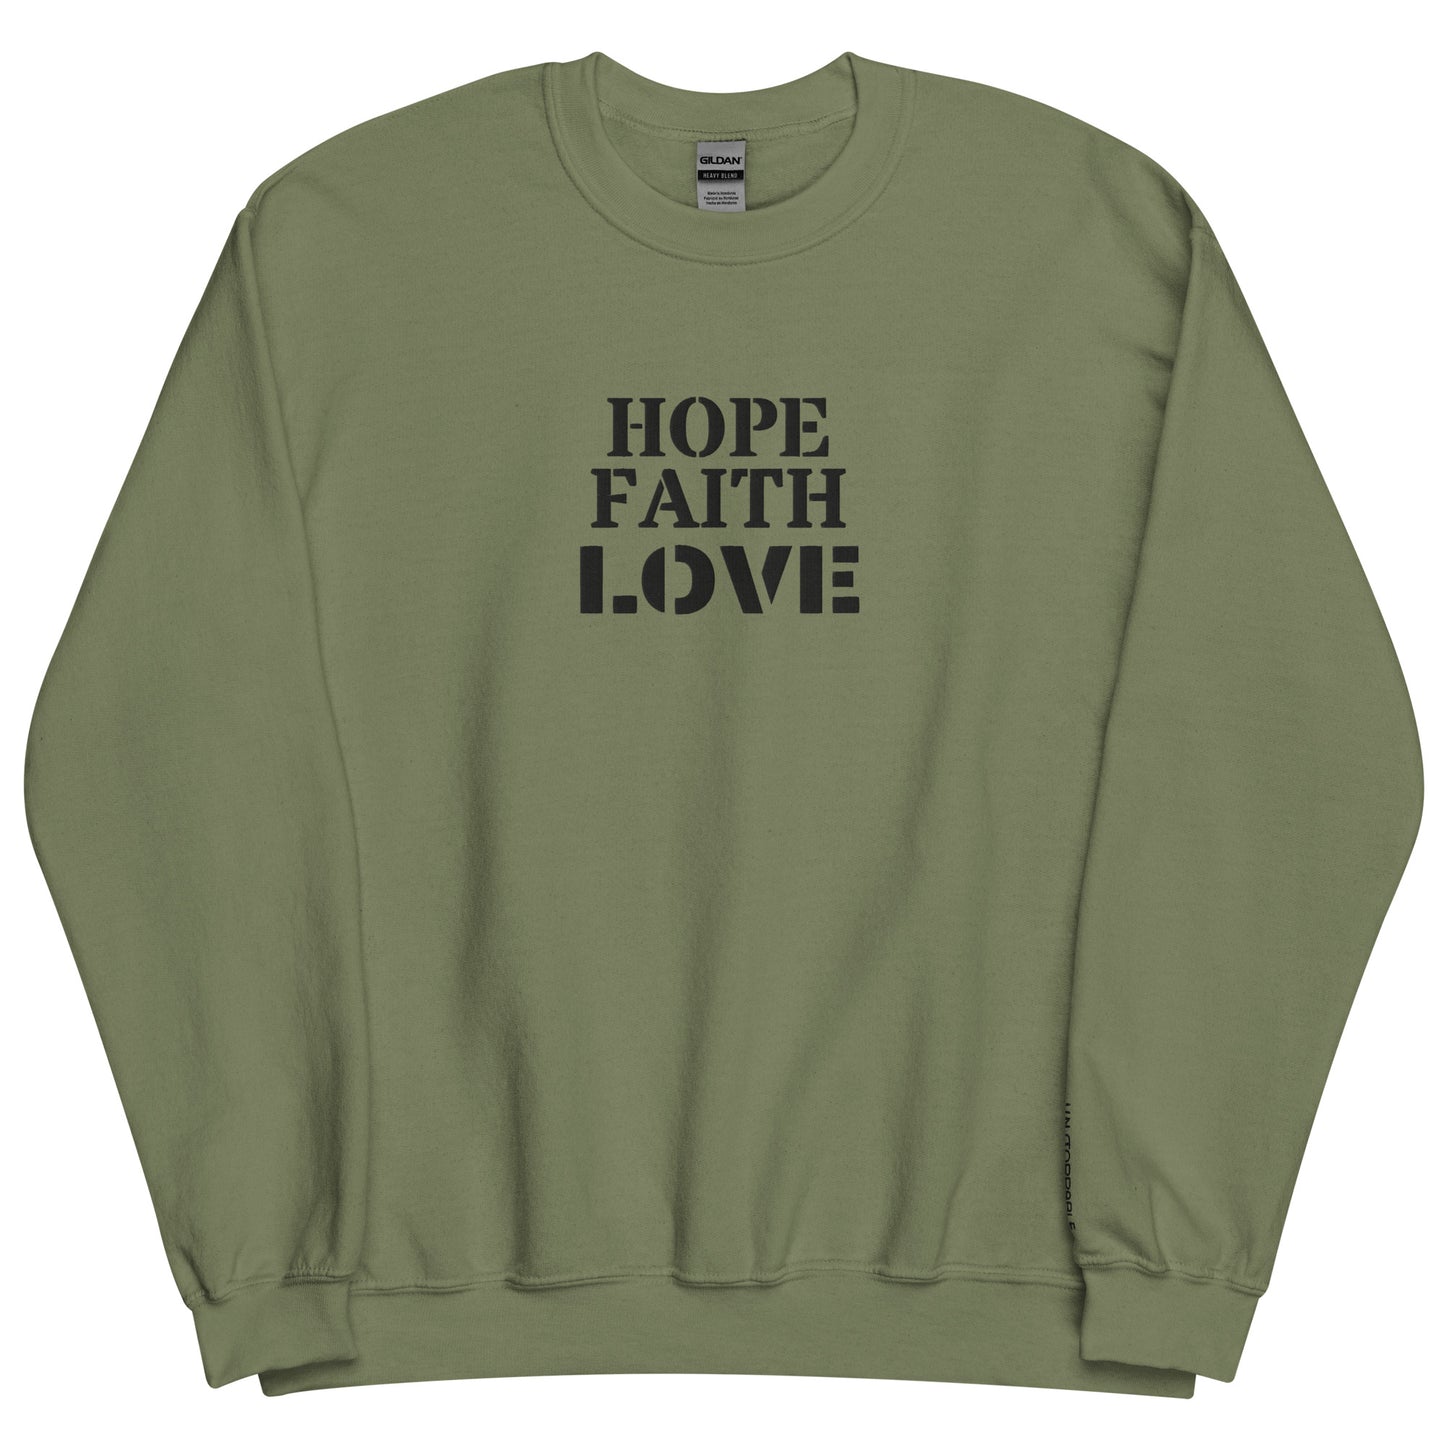 Embroidered Faith Hope Love Crewneck Sweatshirt-embroidery crewneck-Military Green-S-mysticalcherry